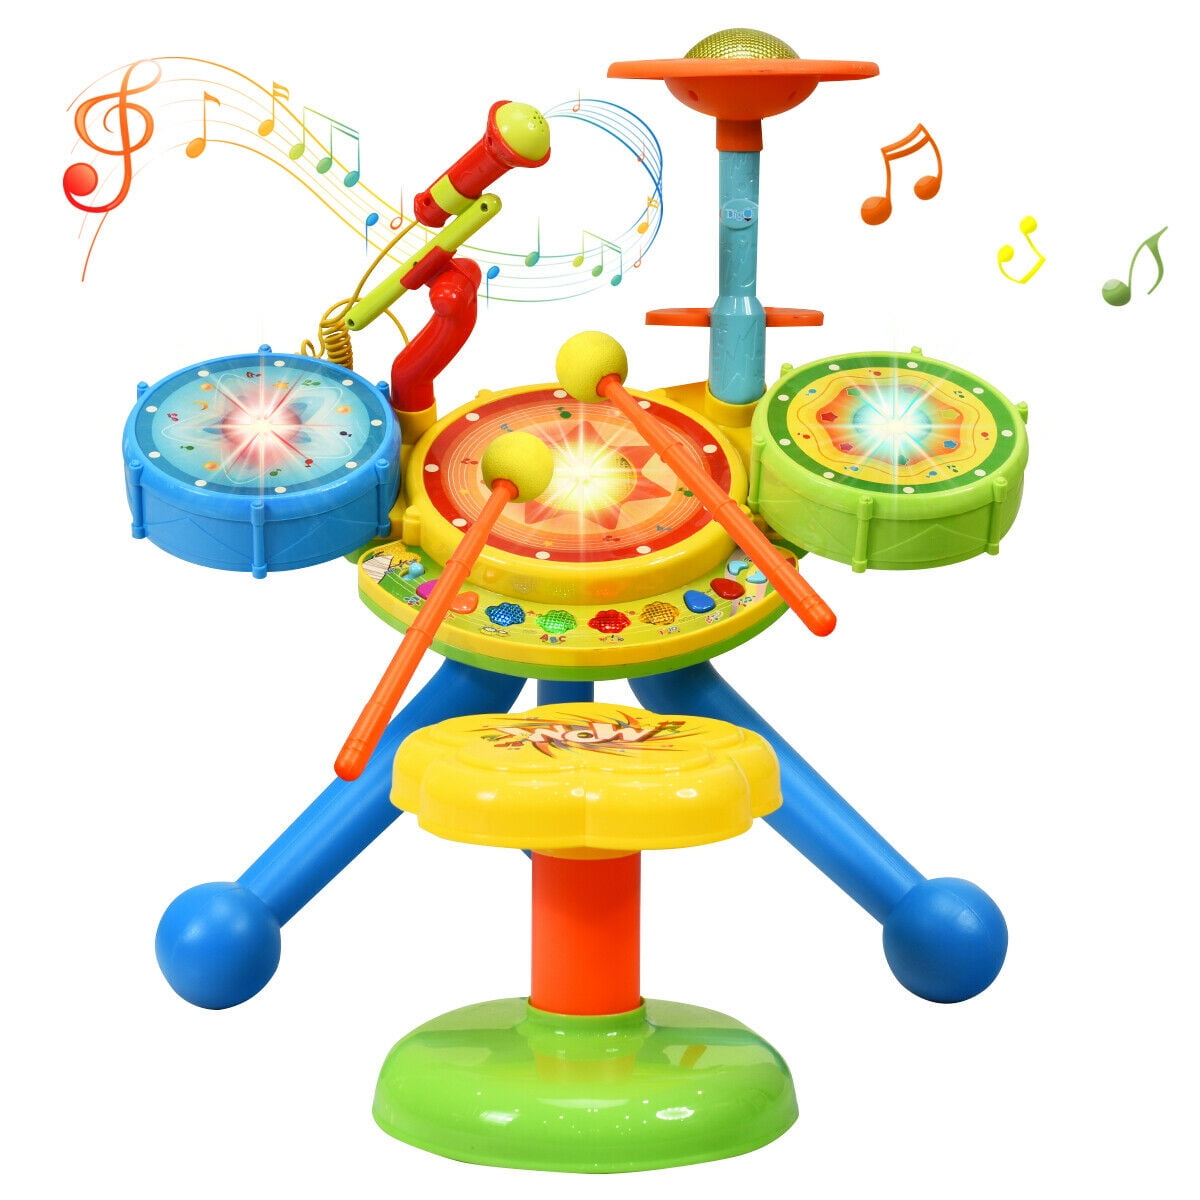 VTech KidiBeats Learning Music Toy Drum Set Model 1344 Blue/Orange 